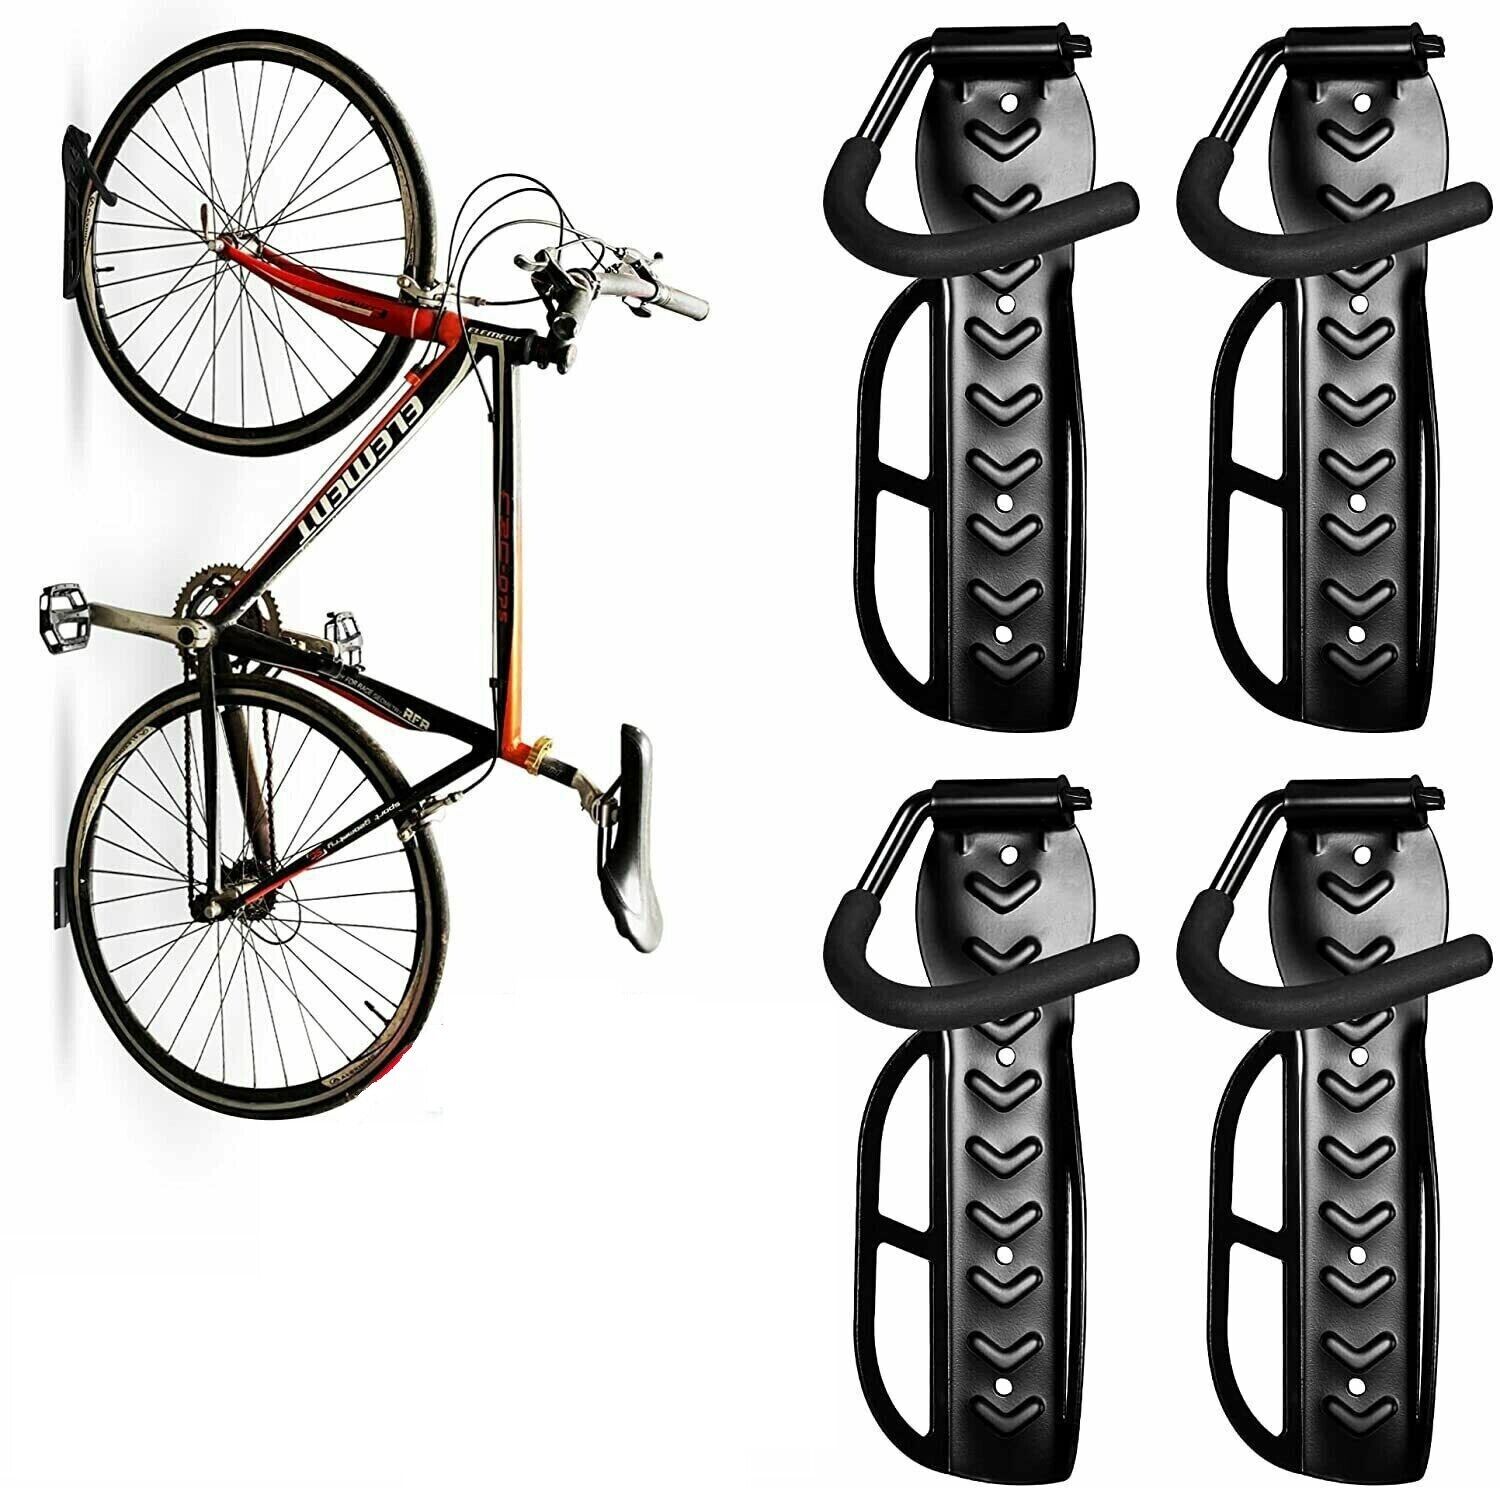 4x Black Bicycle Bike Storage Rack Hook Wall Mount Vertical Garage Bicycle Hanger Stand Holder